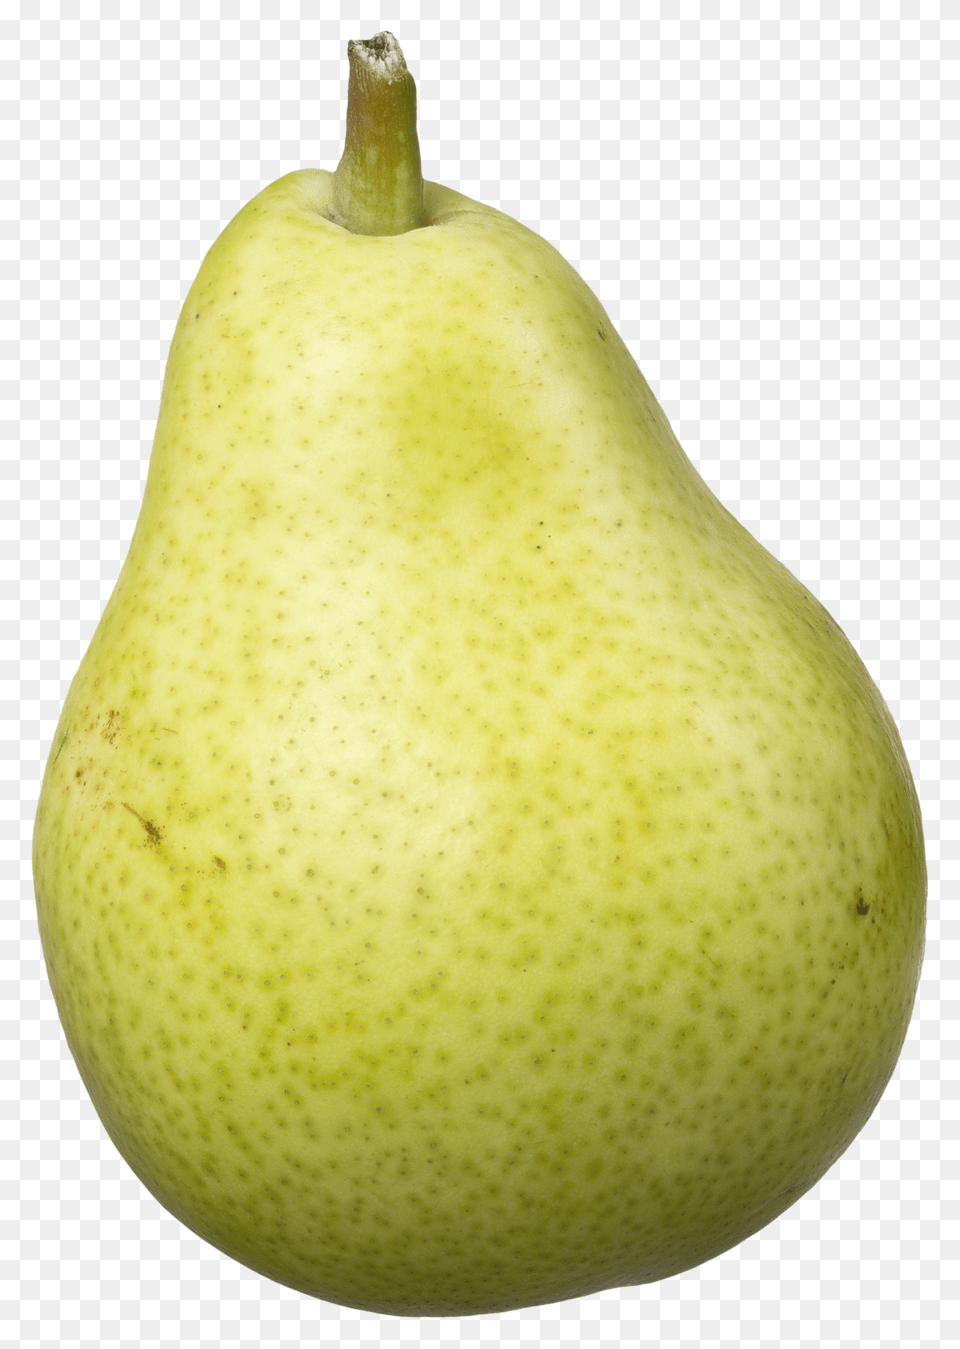 Pngpix Com Pear Fruit Transparent, Food, Plant, Produce Free Png Download